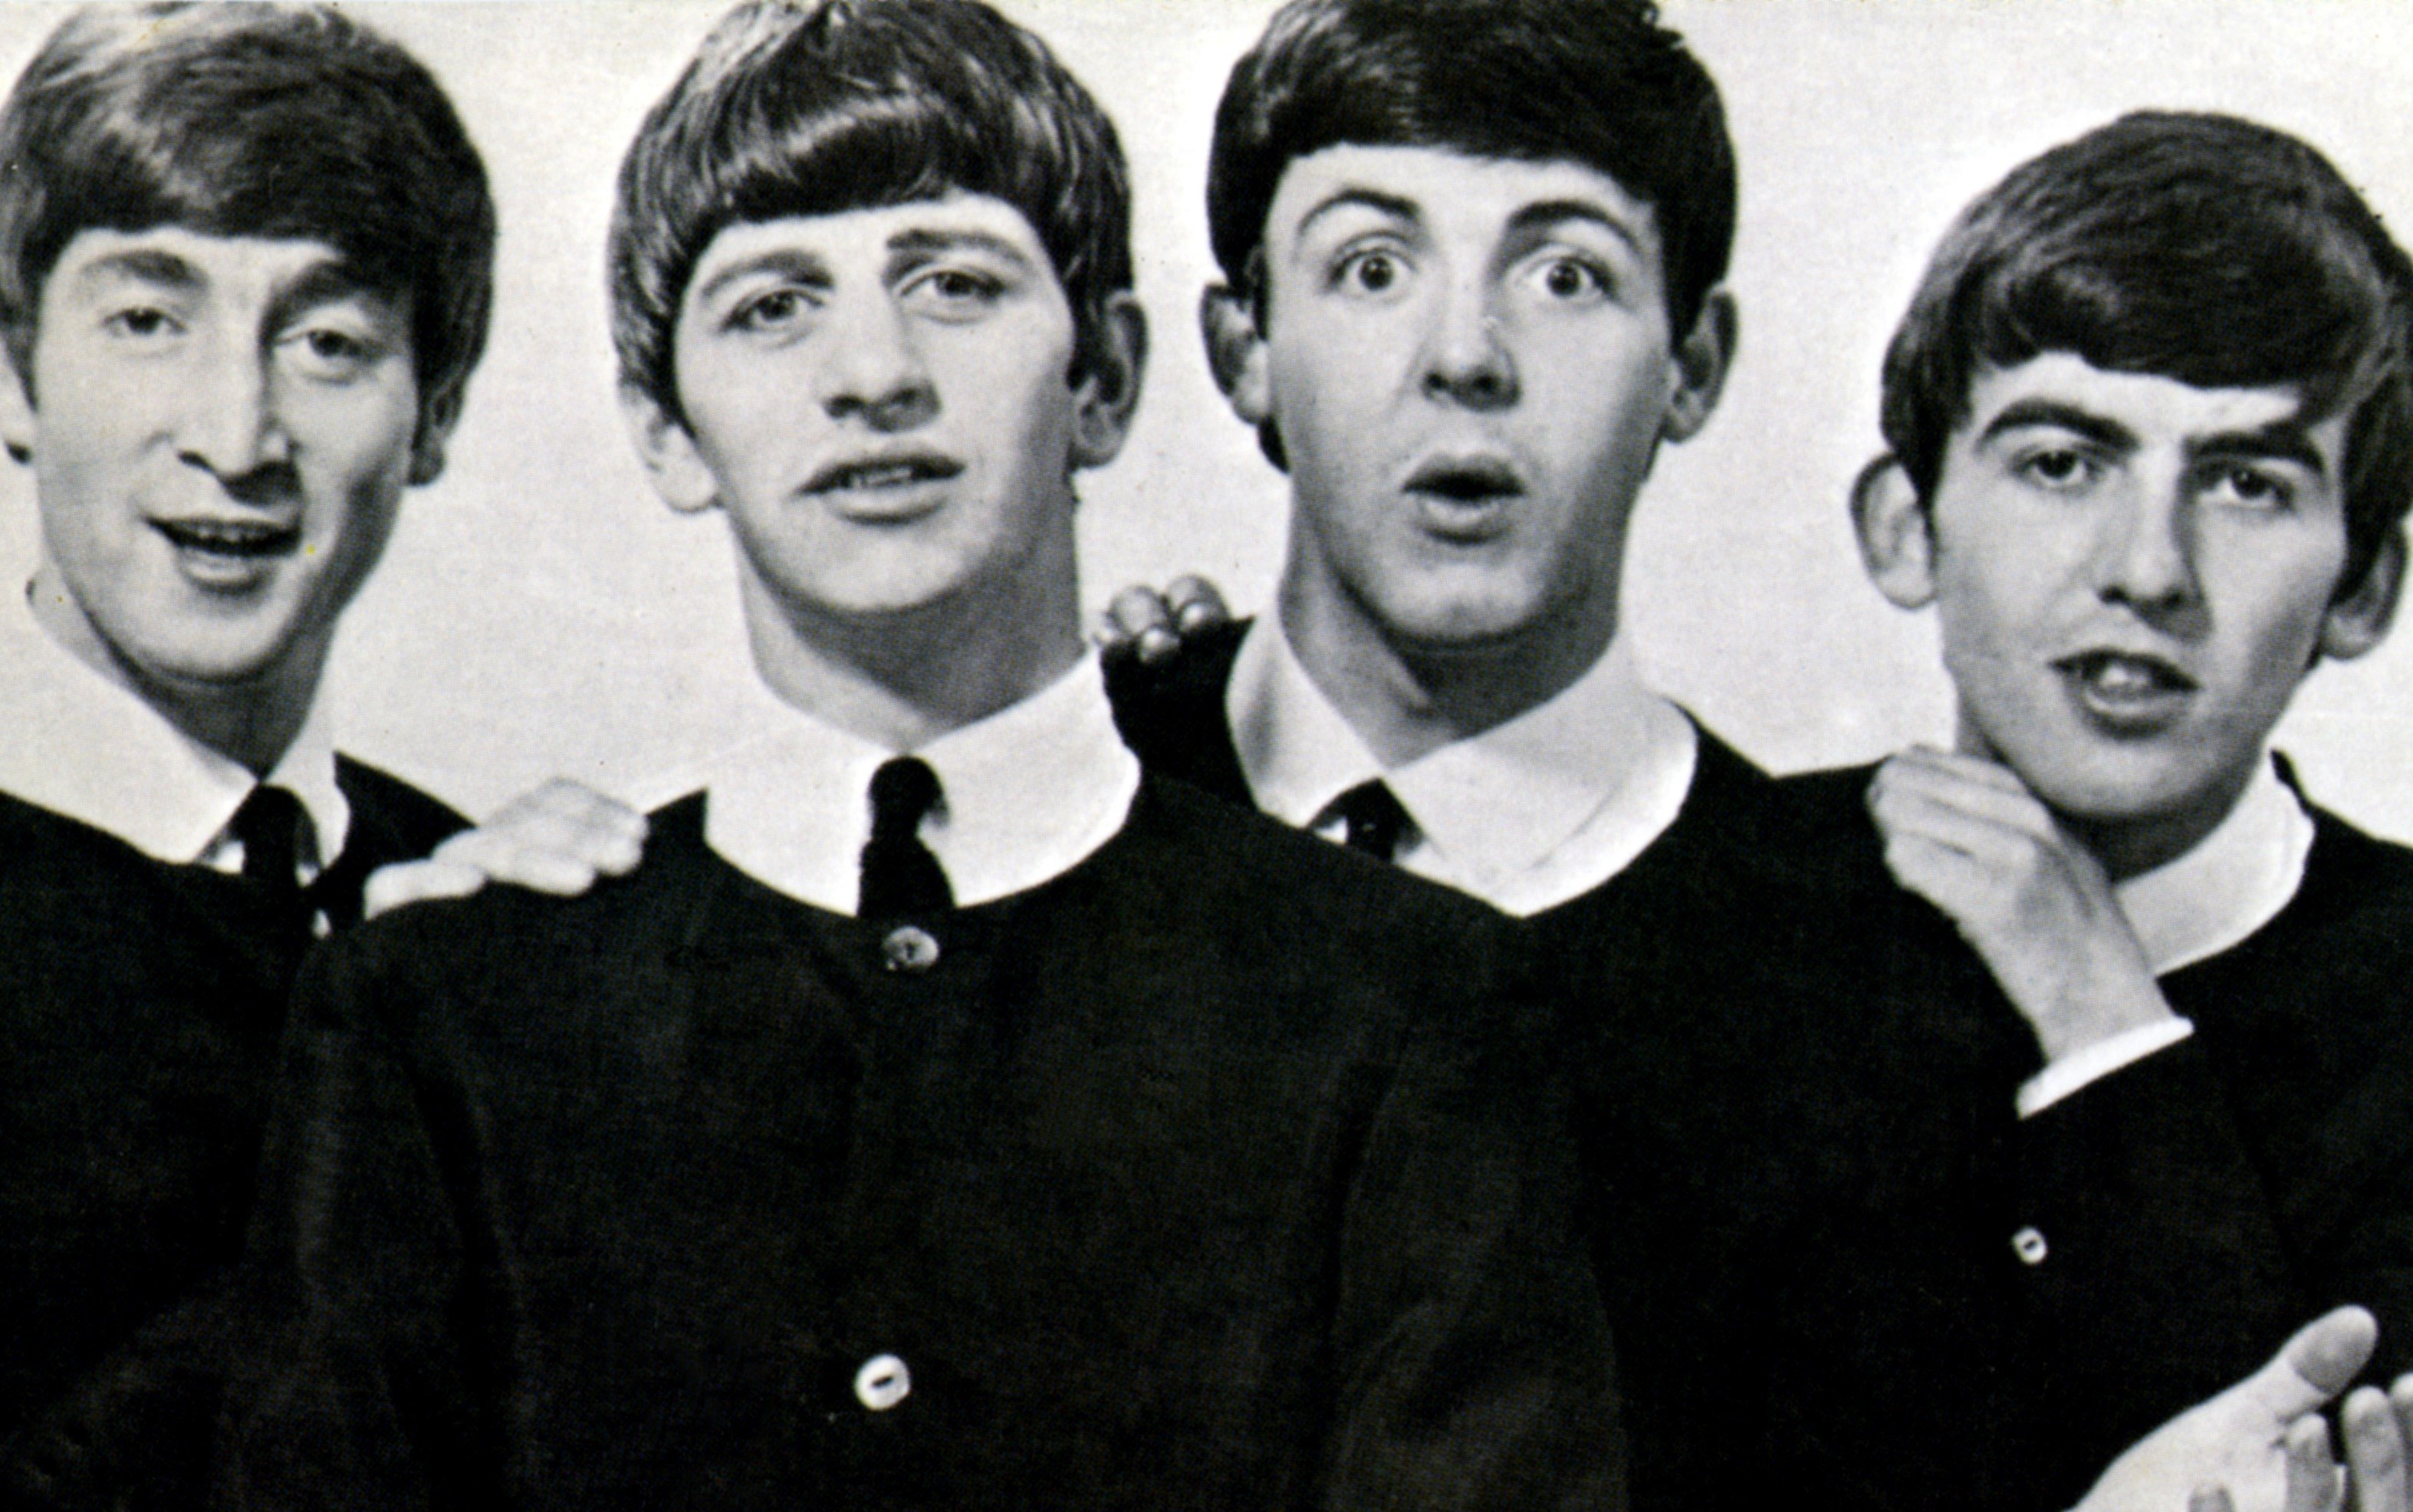 The Beatles' John Lennon, Ringo Starr, Paul McCartney, and George Harrison dressed identically during the "Paperback Writer" era